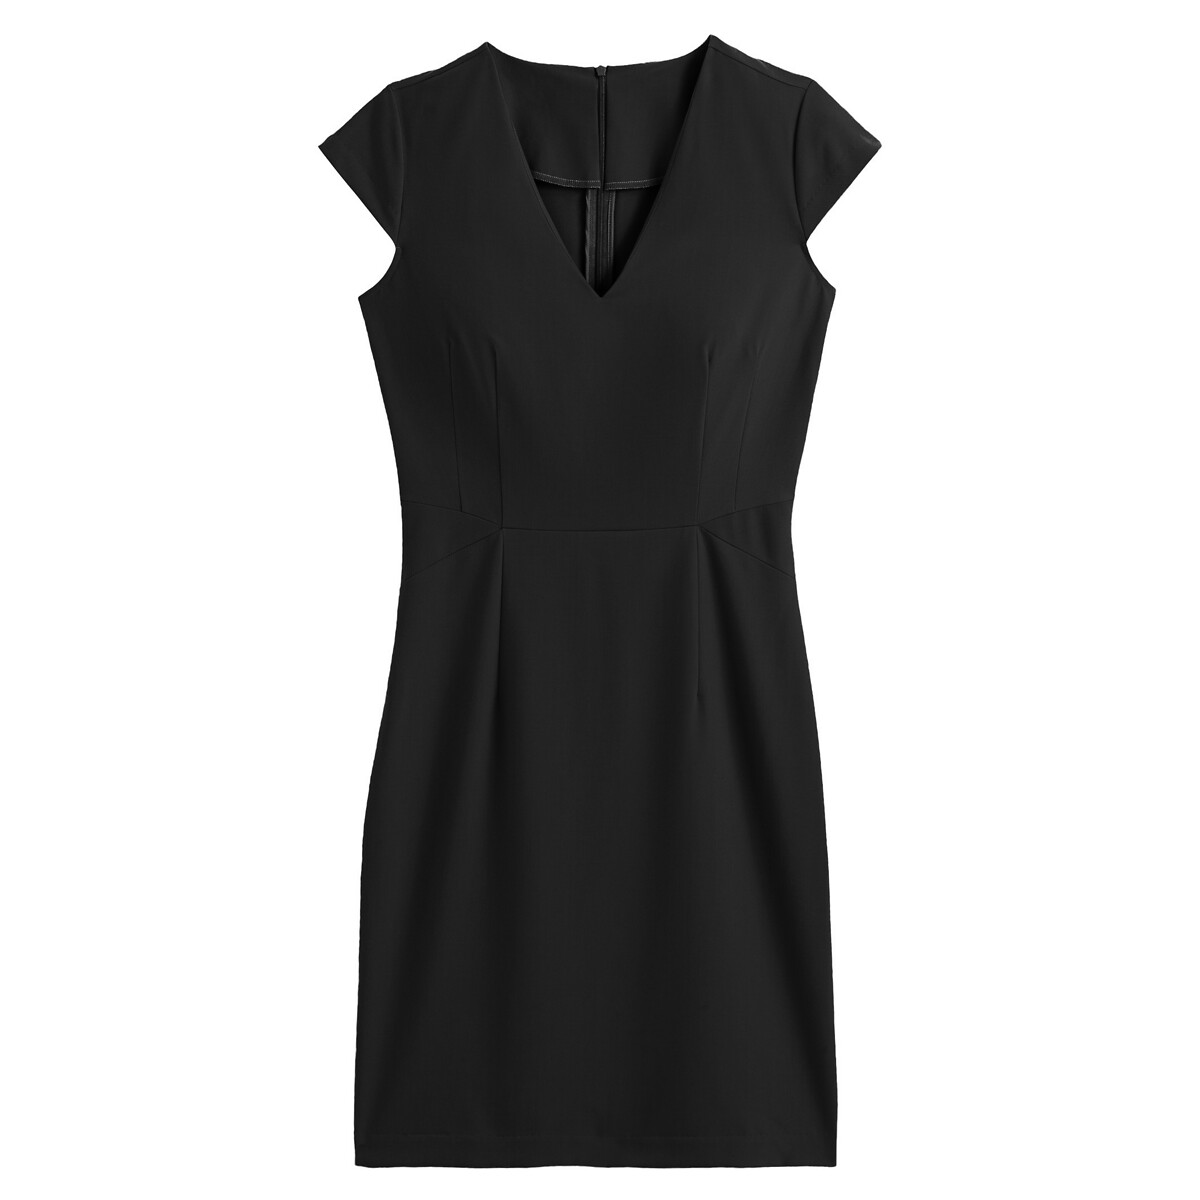 Платье LaRedoute Без рукавов в форме футляра 34 (FR) - 40 (RUS) черный, размер 34 (FR) - 40 (RUS) Без рукавов в форме футляра 34 (FR) - 40 (RUS) черный - фото 5